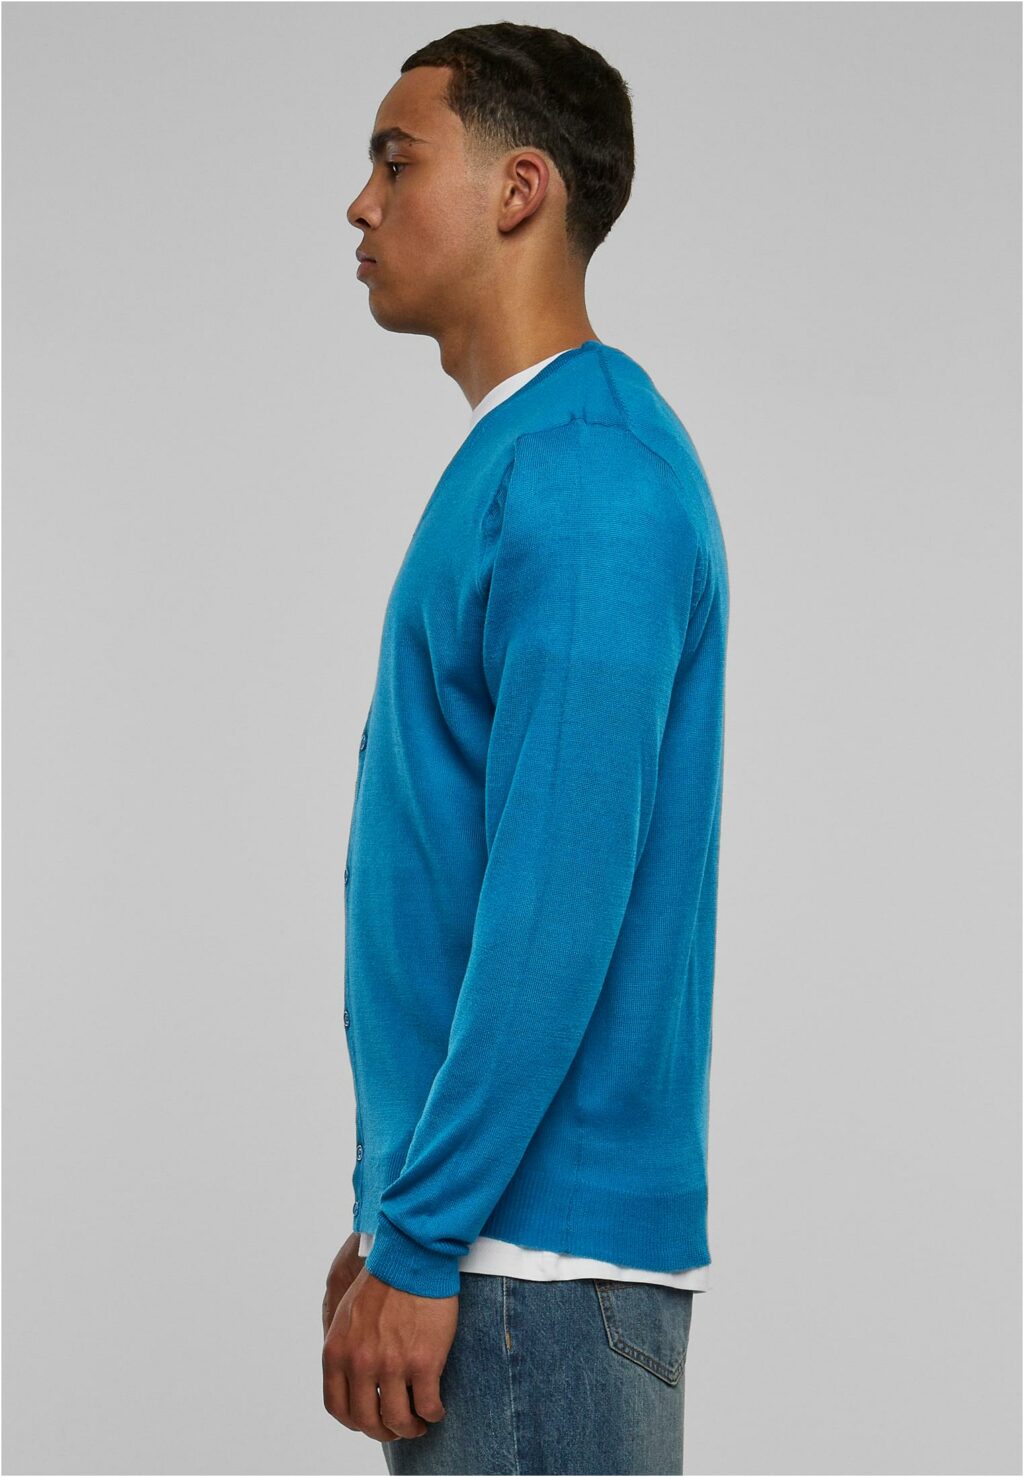 Urban Classics Knitted Cardigan turquoise TB405